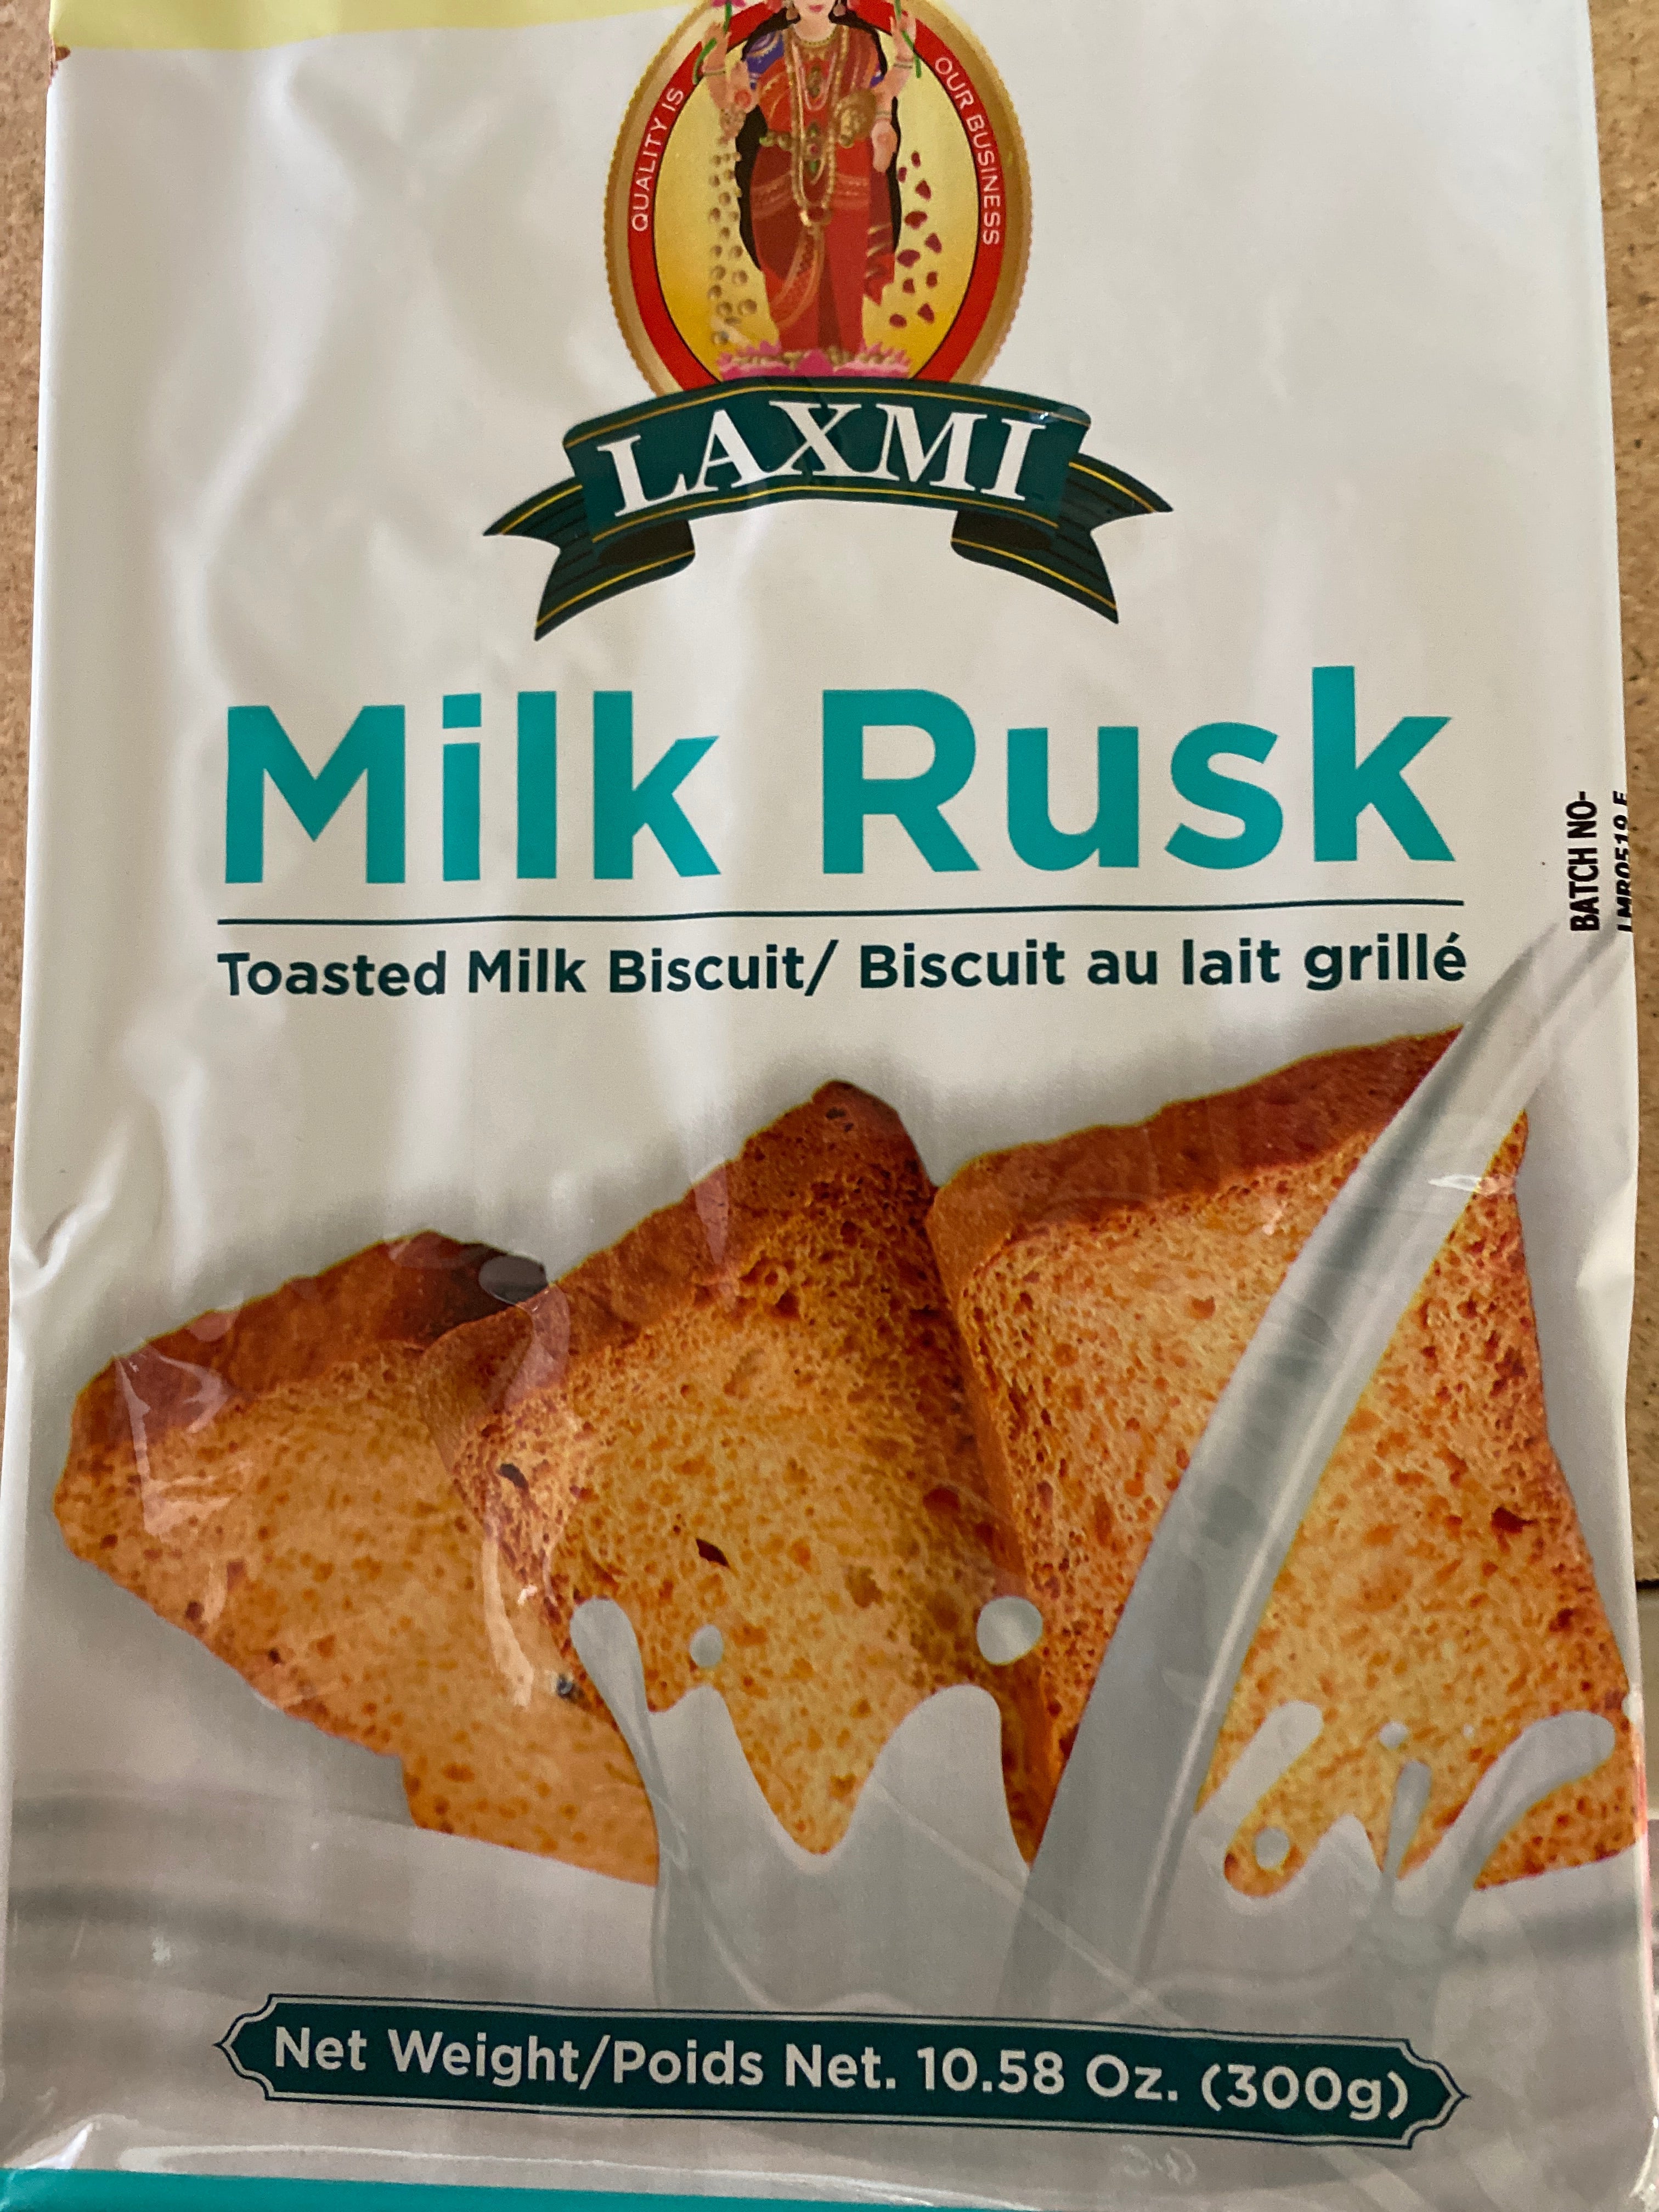 Laxmi Milk Rusk